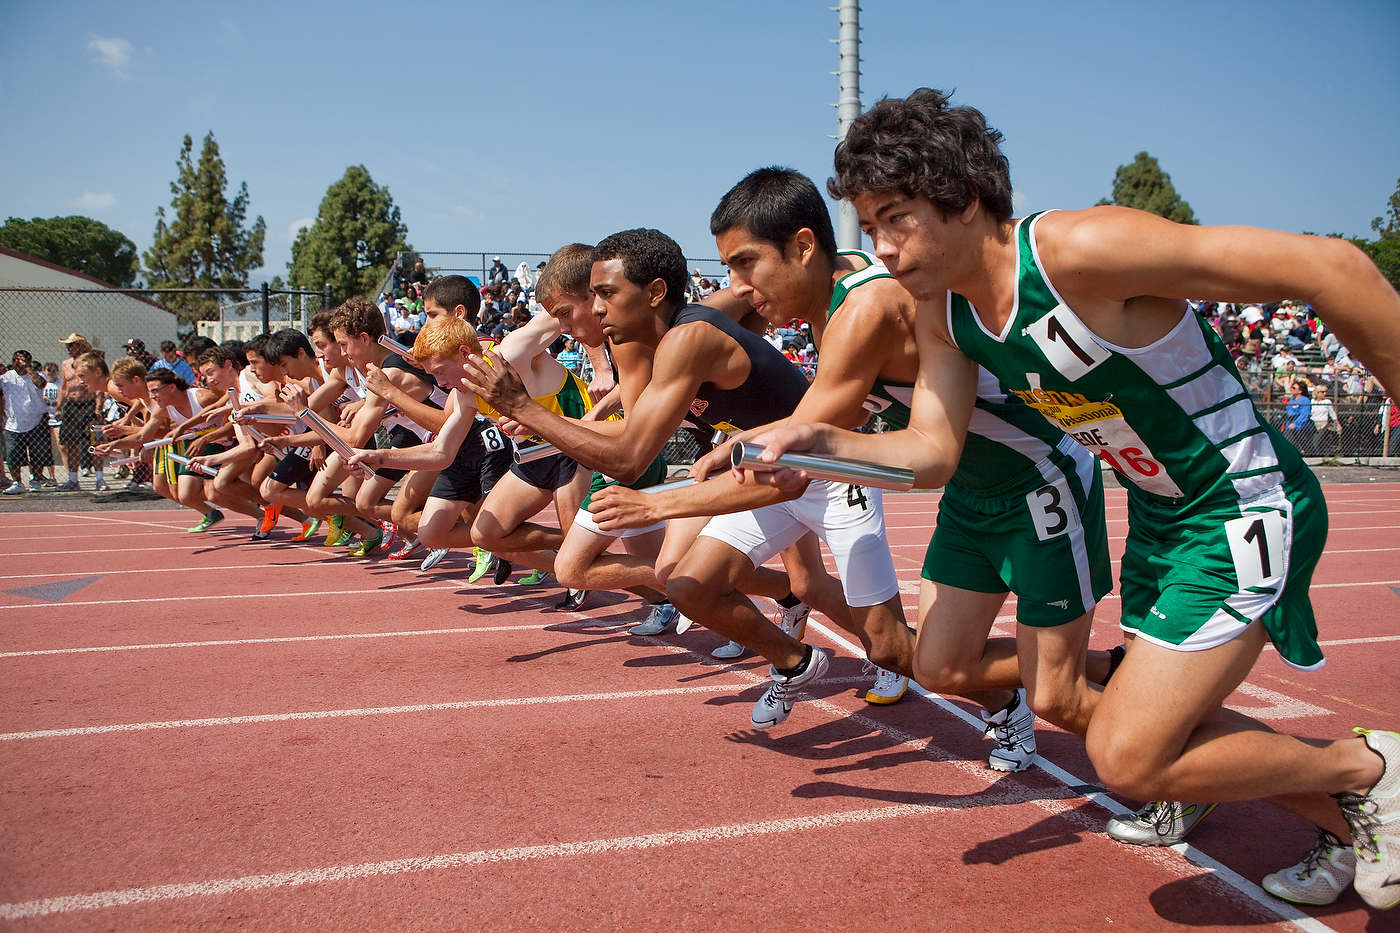 High school track & field meet, for Nike.